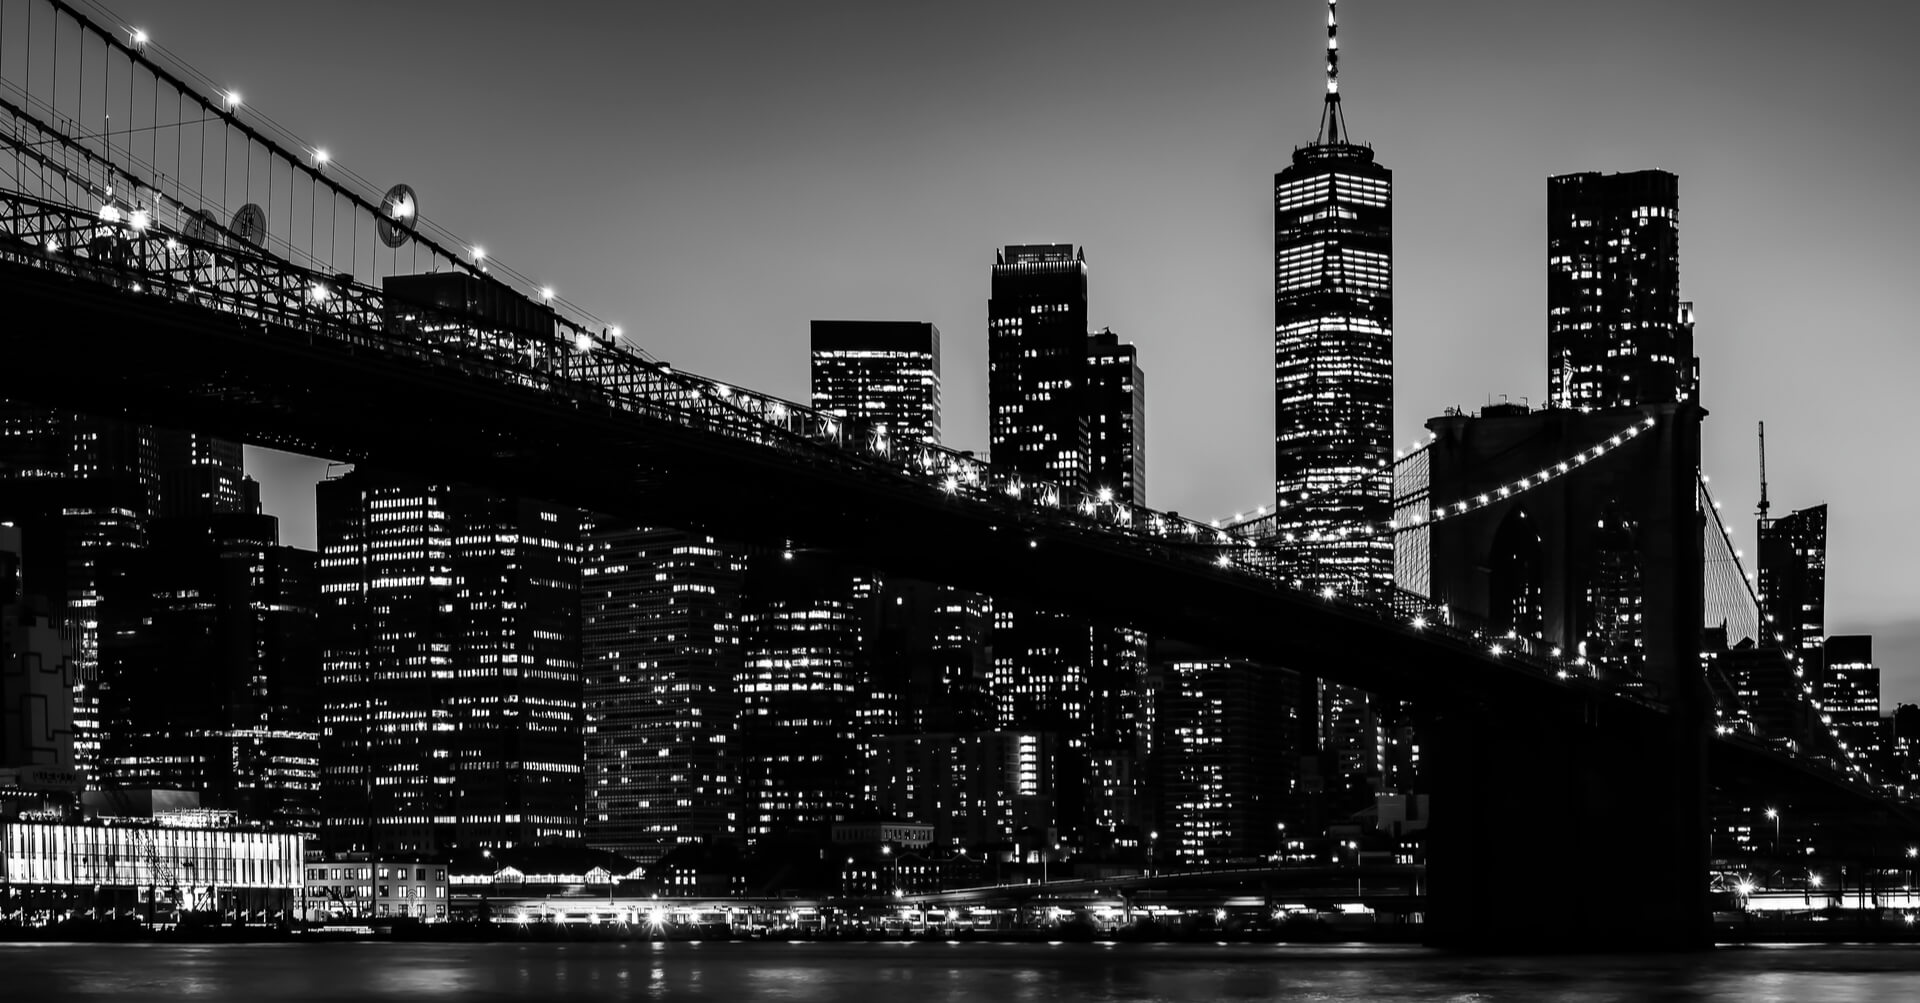 Black and white photo of the brooklyn bridge at night.